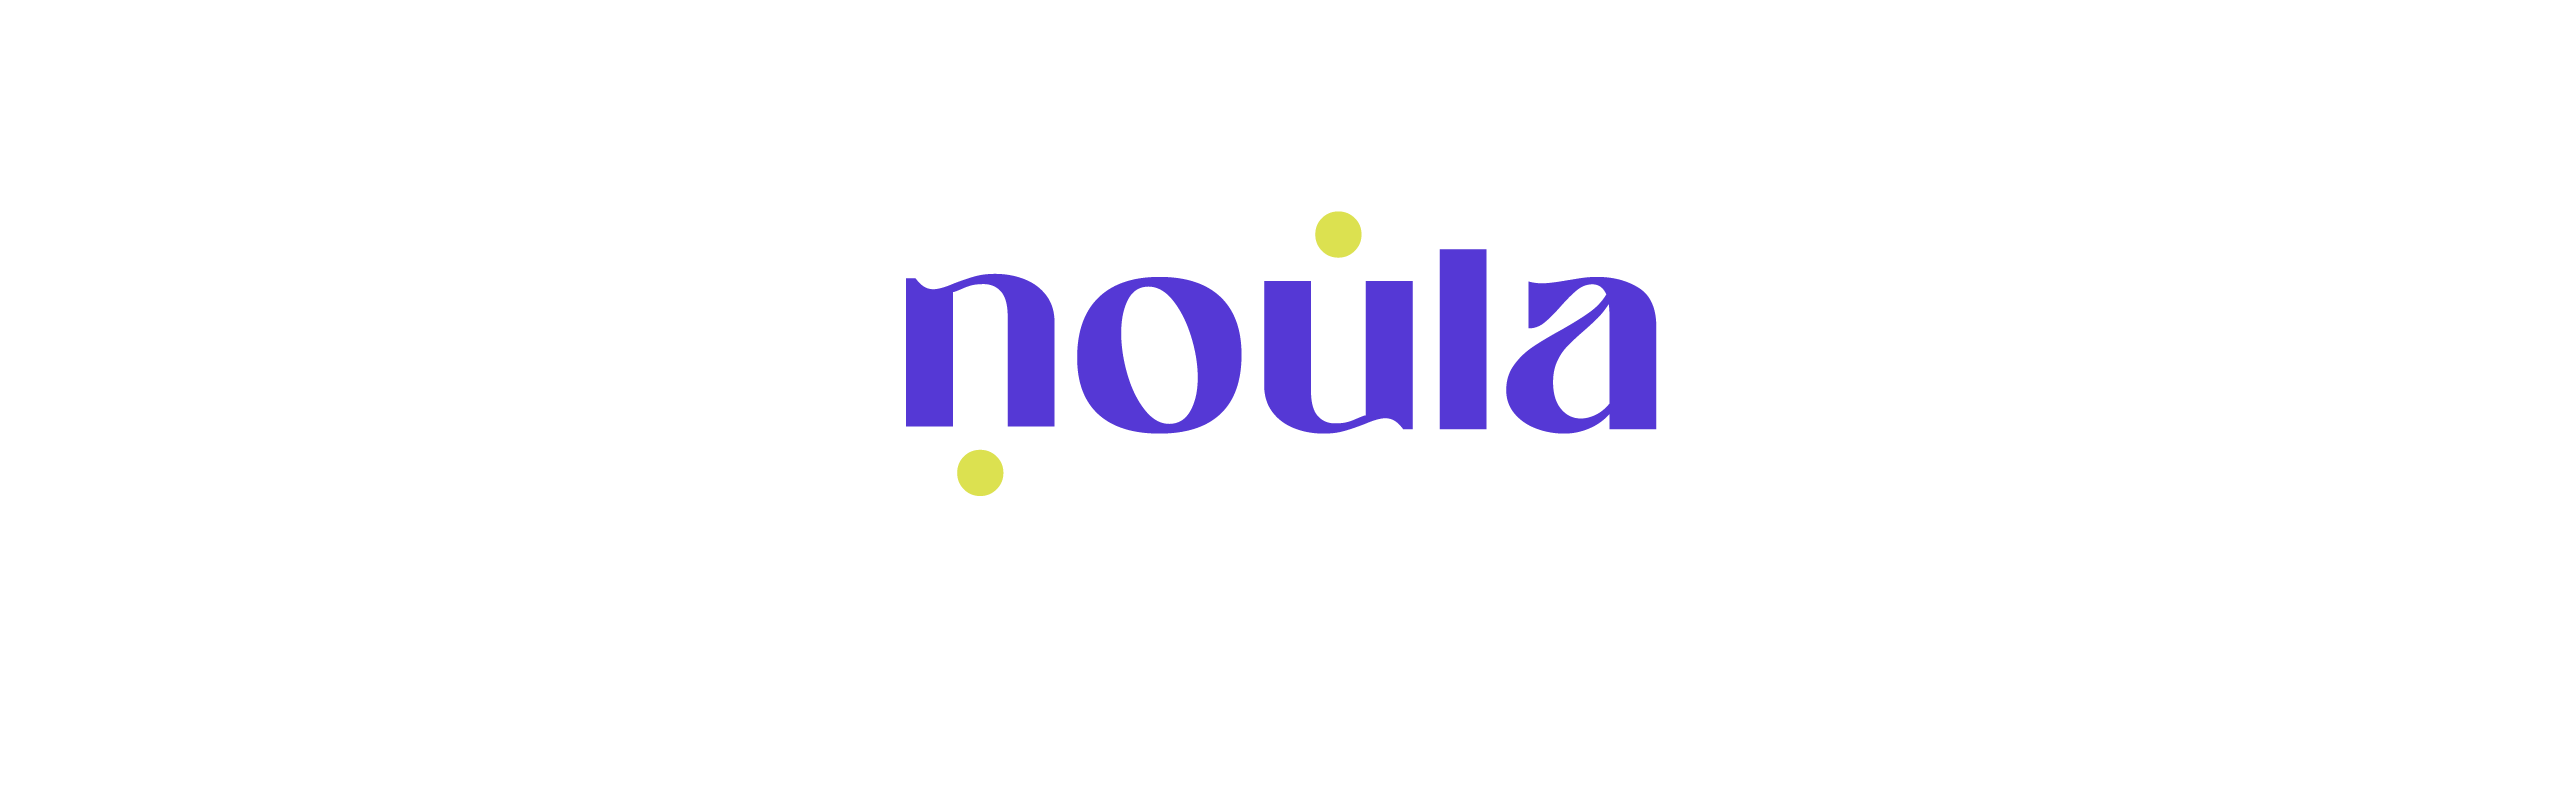 Noula Branding and Packaging Design :: Behance